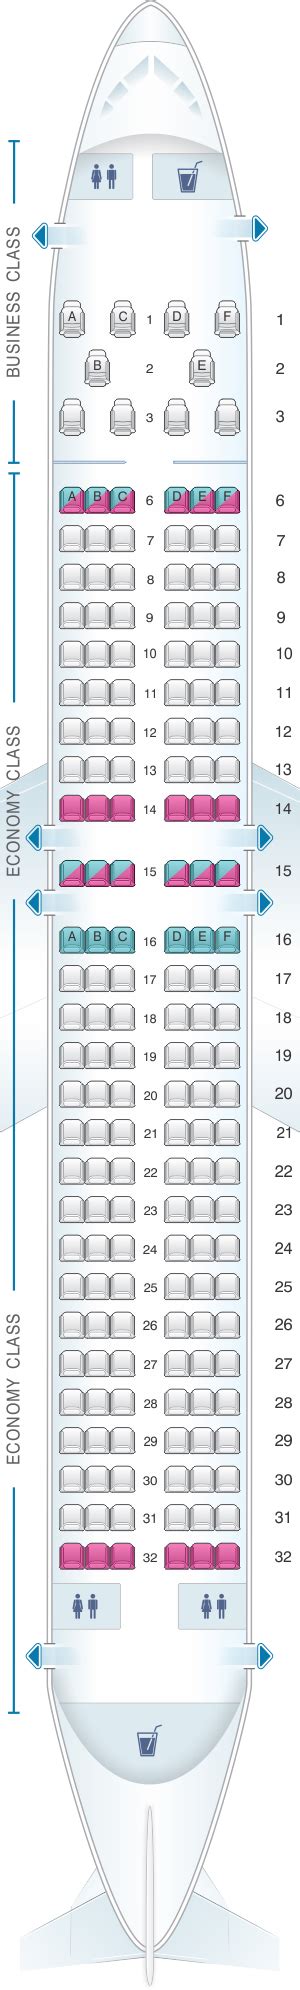 emirates boeing 737 max 8 seat map